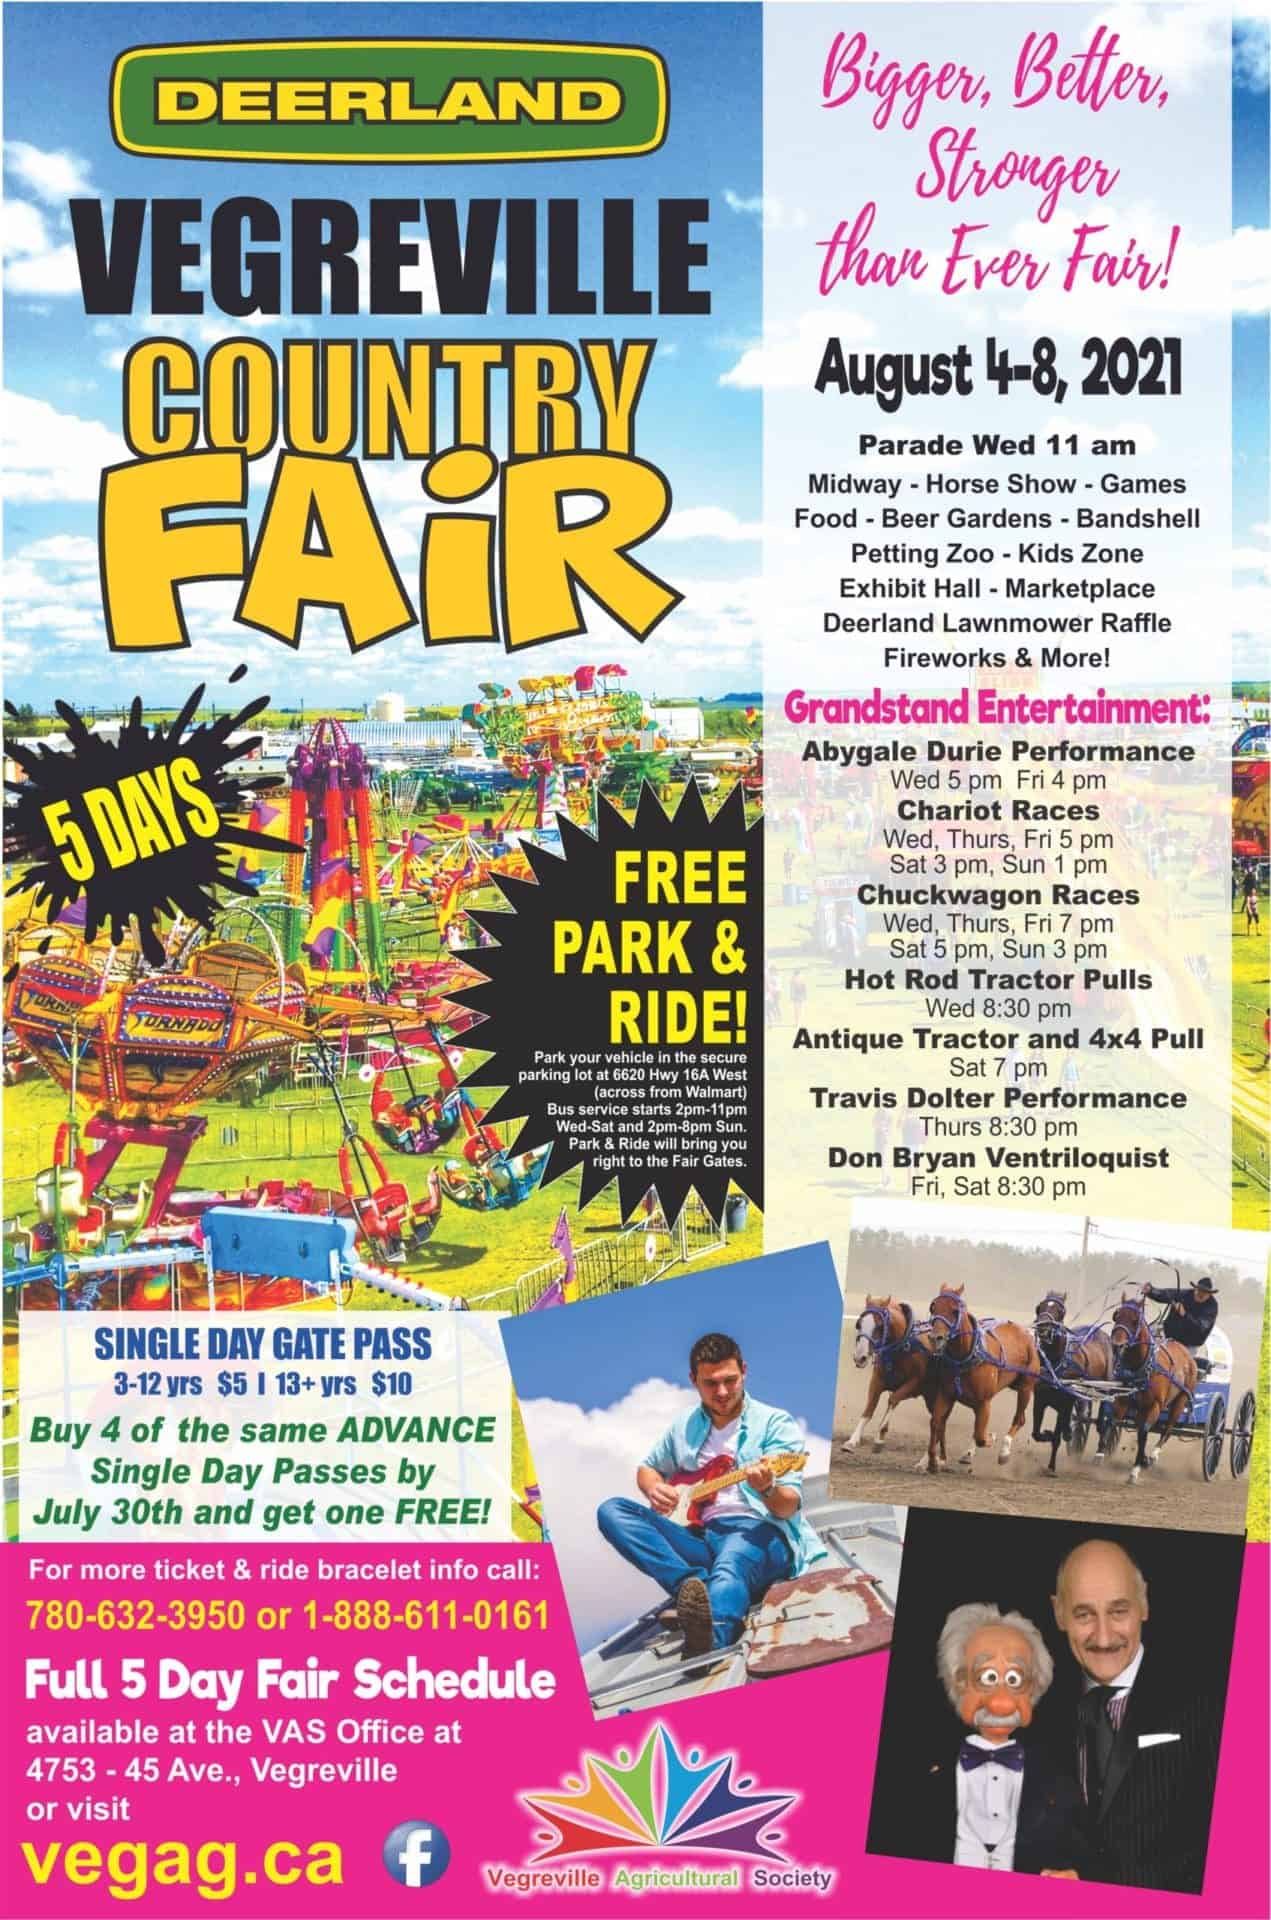 Deerland Vegreville Country Fair Go East of Edmonton